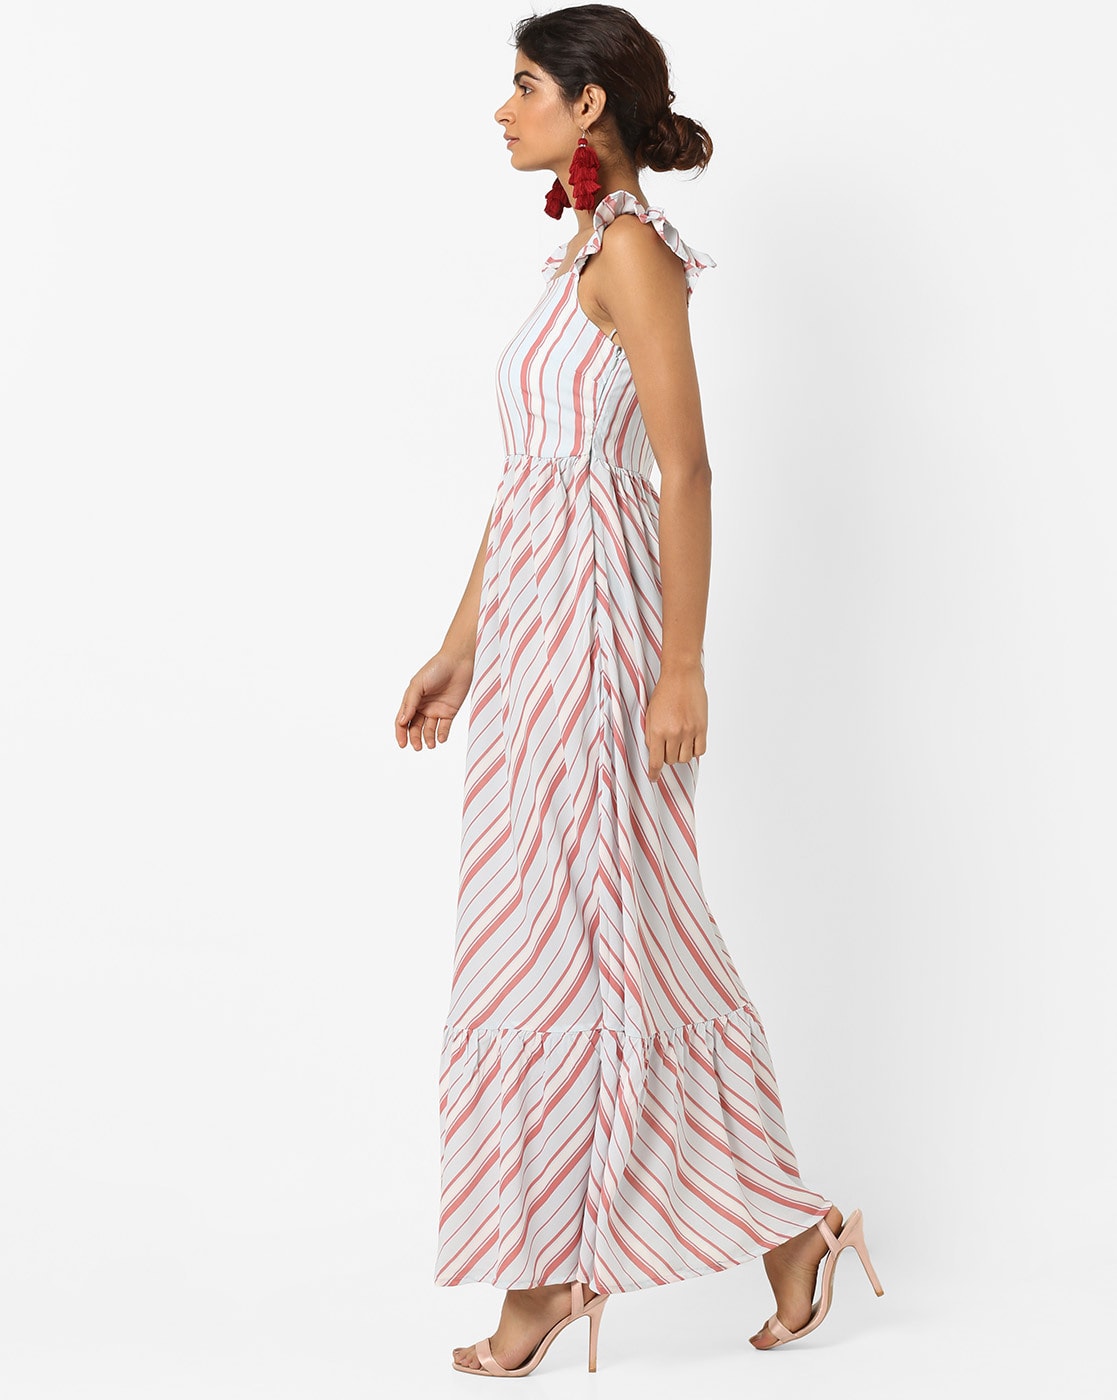 Buy Off-White & Pink Dresses for Women by Vero Moda